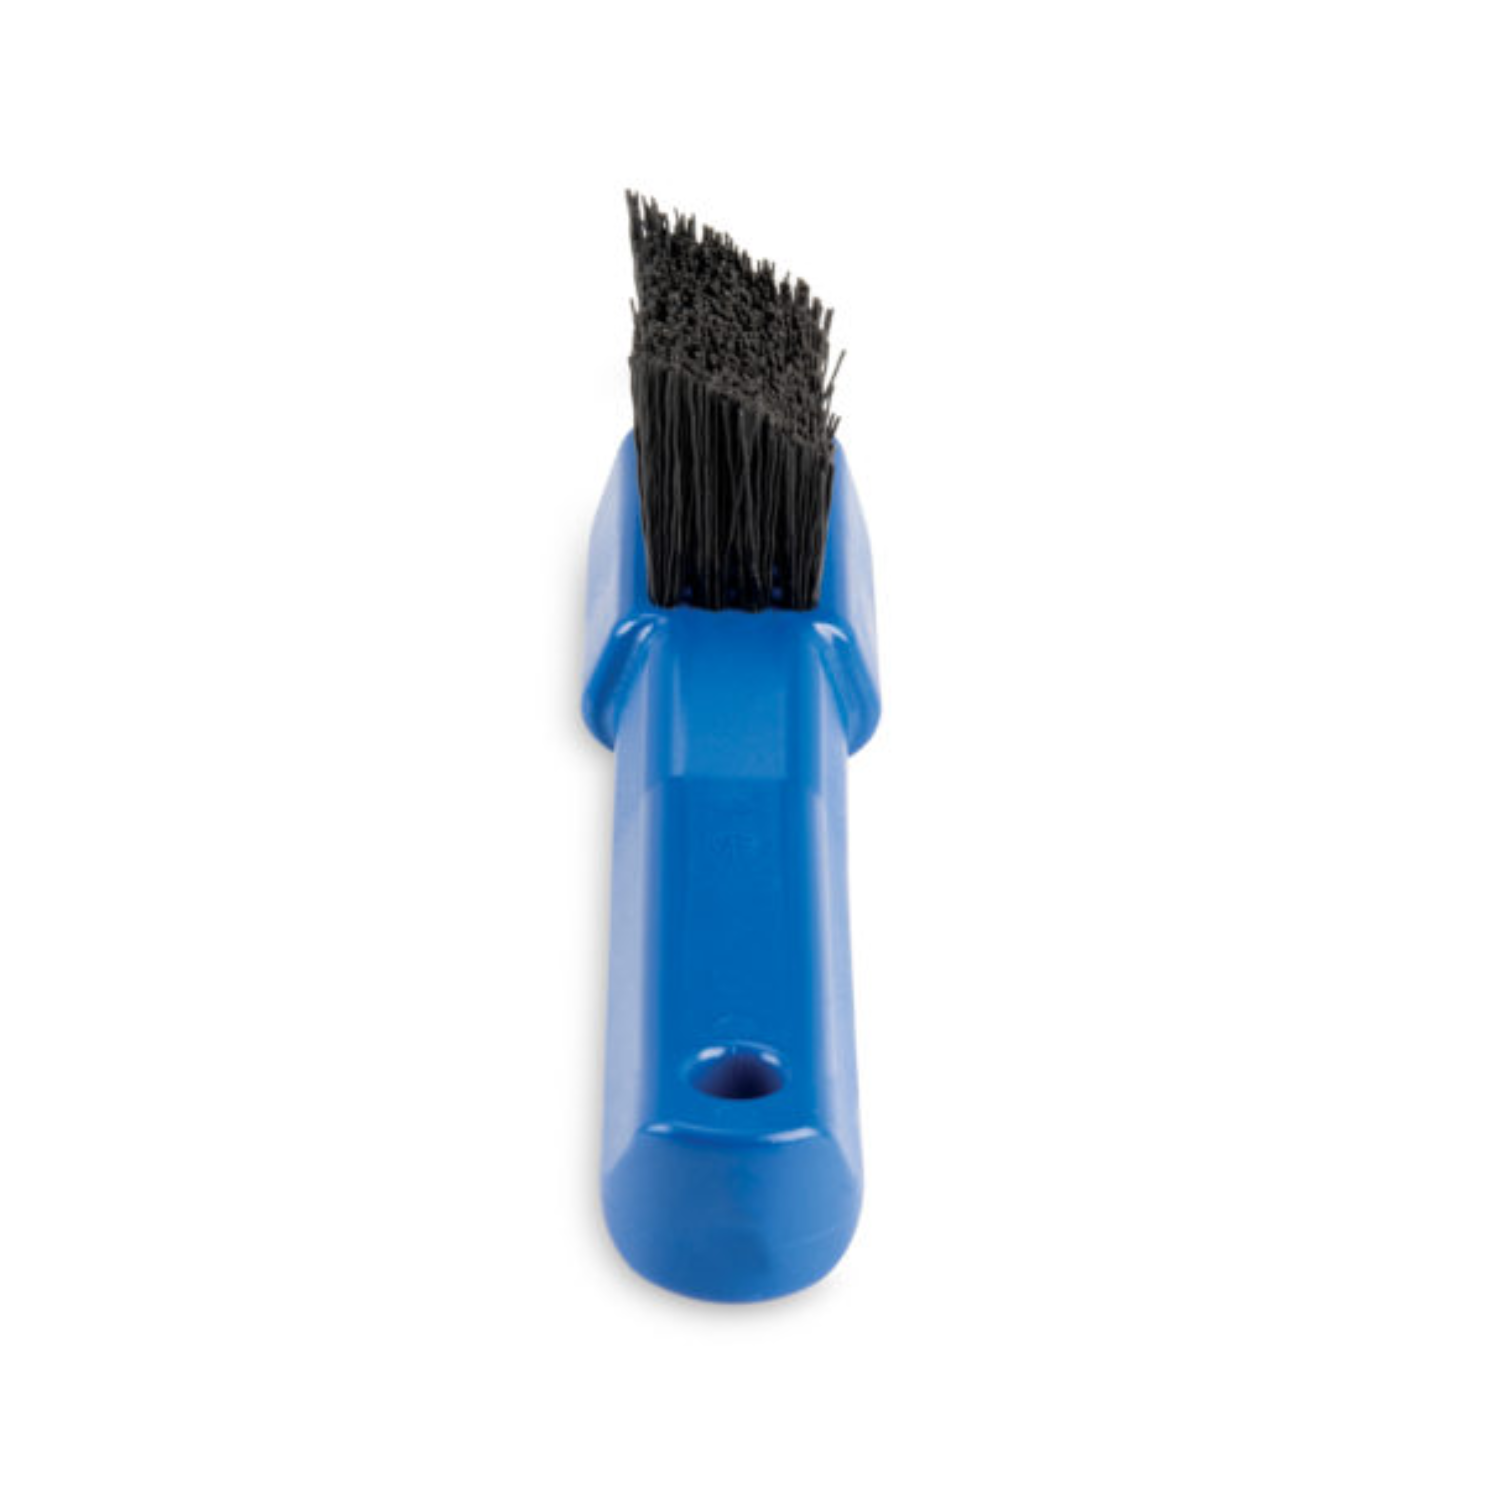 GSC-3 Drivetrain Cleaning Brush